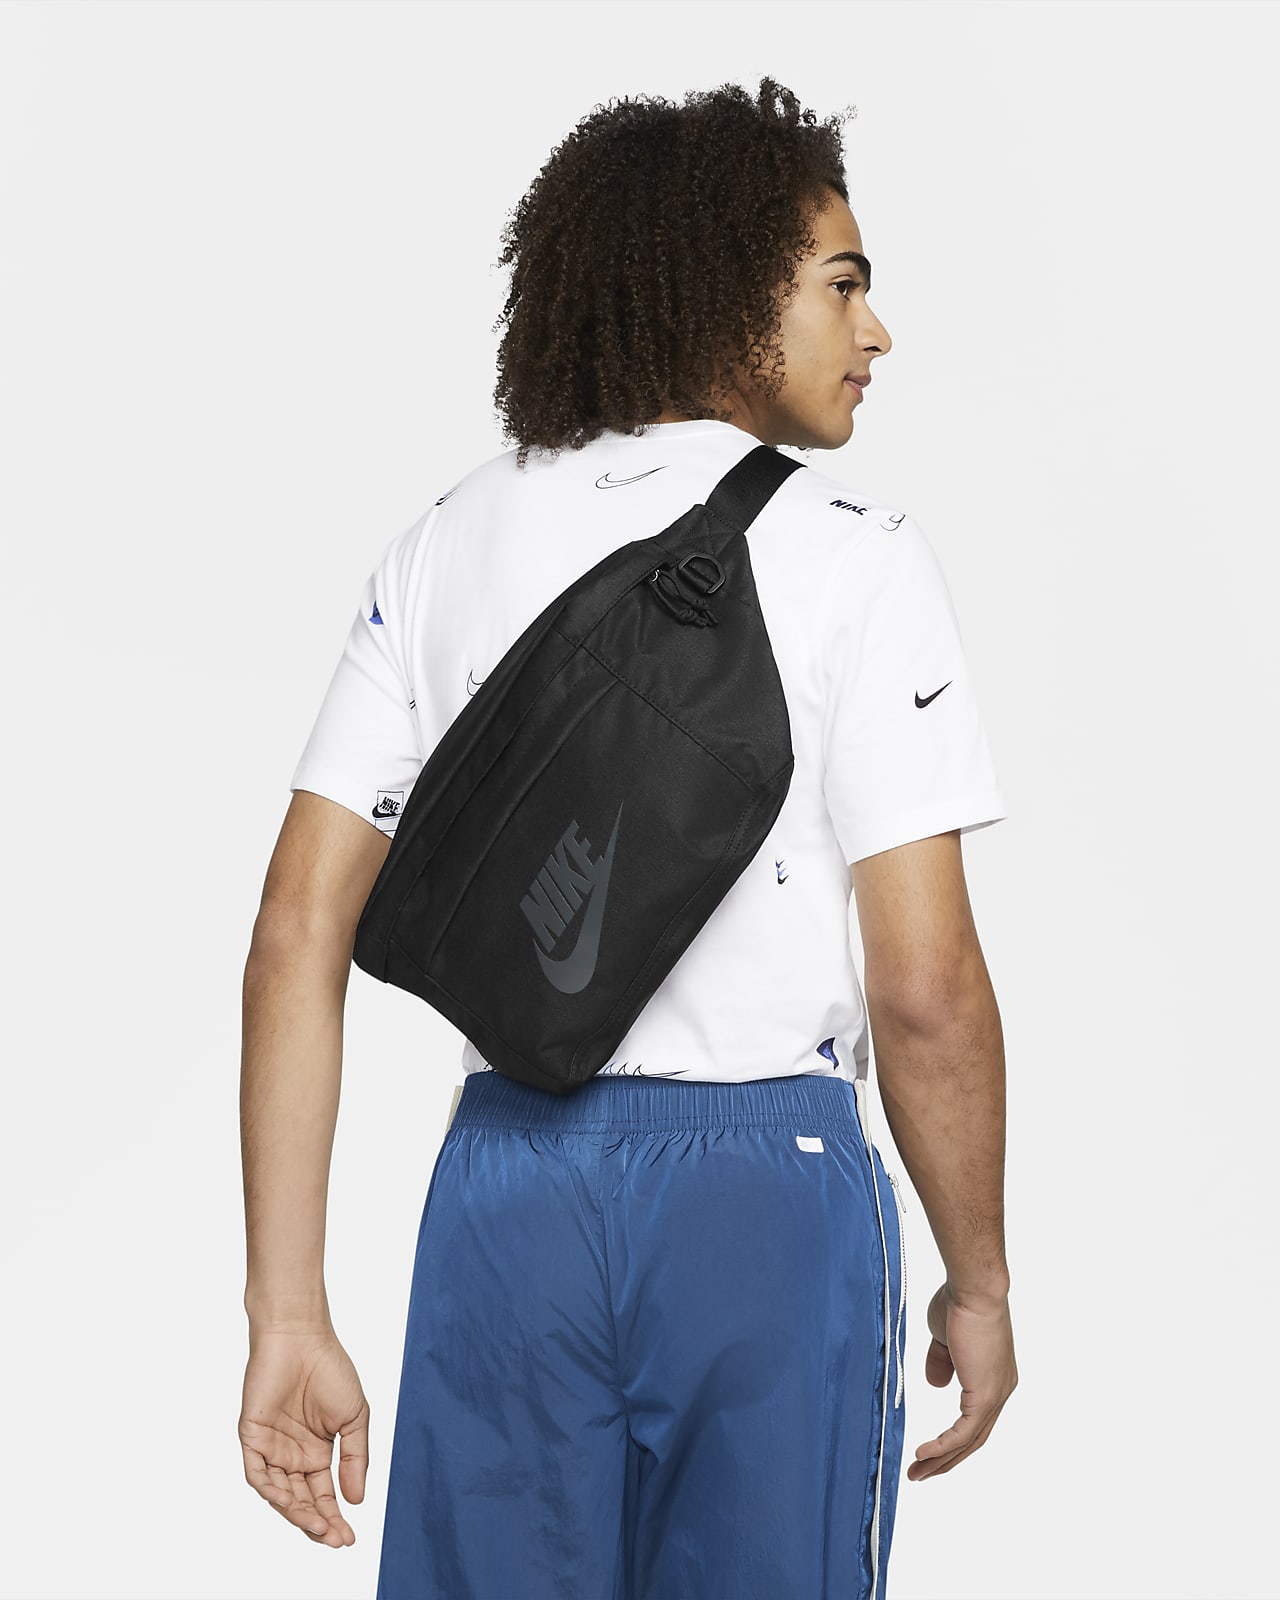 Men's Bags & Gymsacks | JD Sports Global